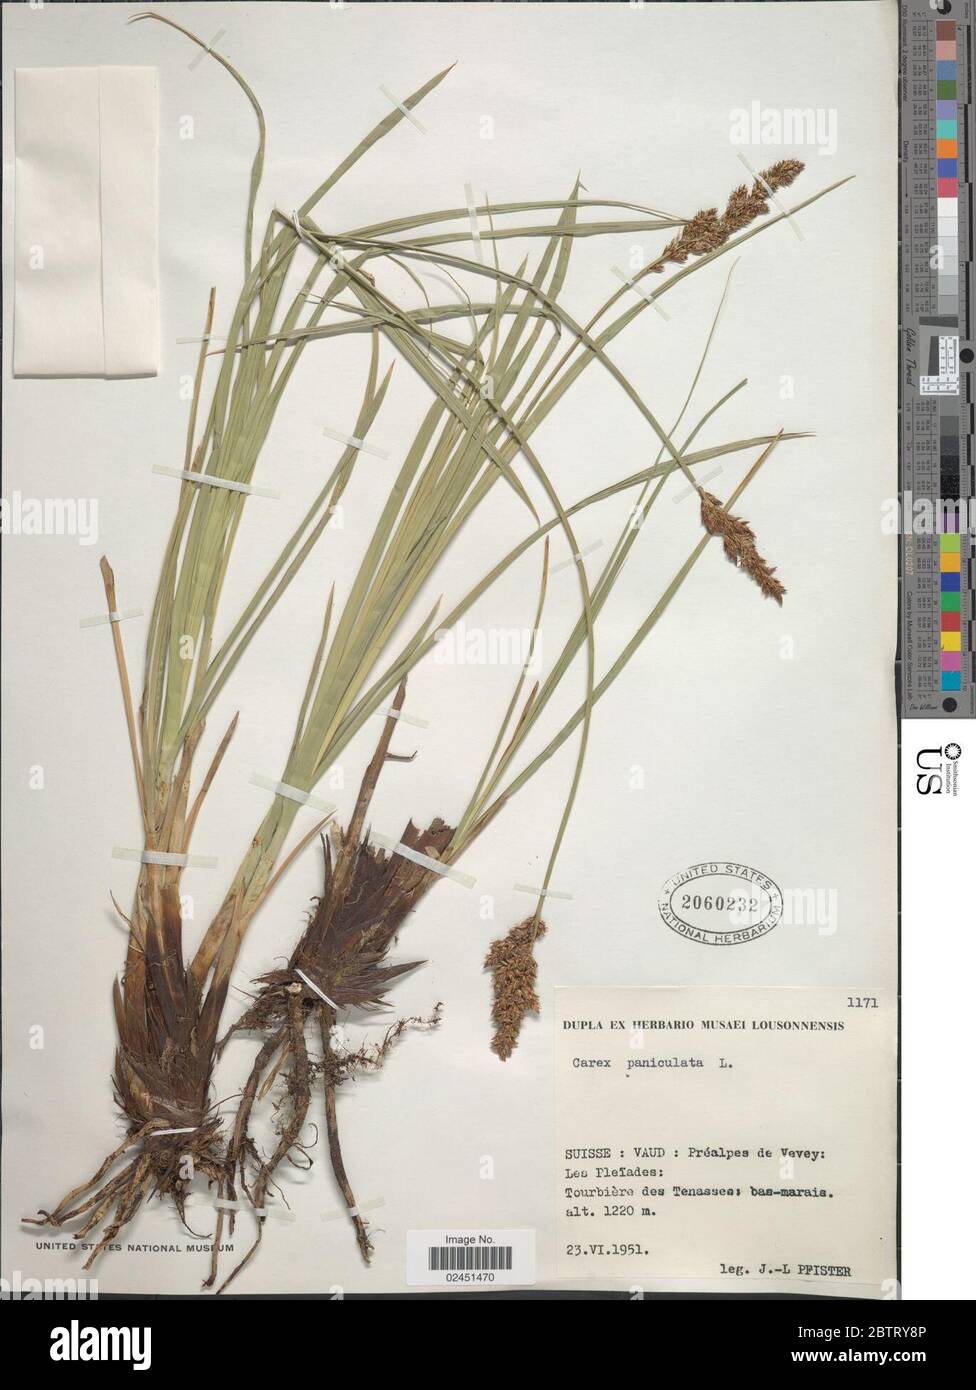 Carex paniculata L. Stock Photo